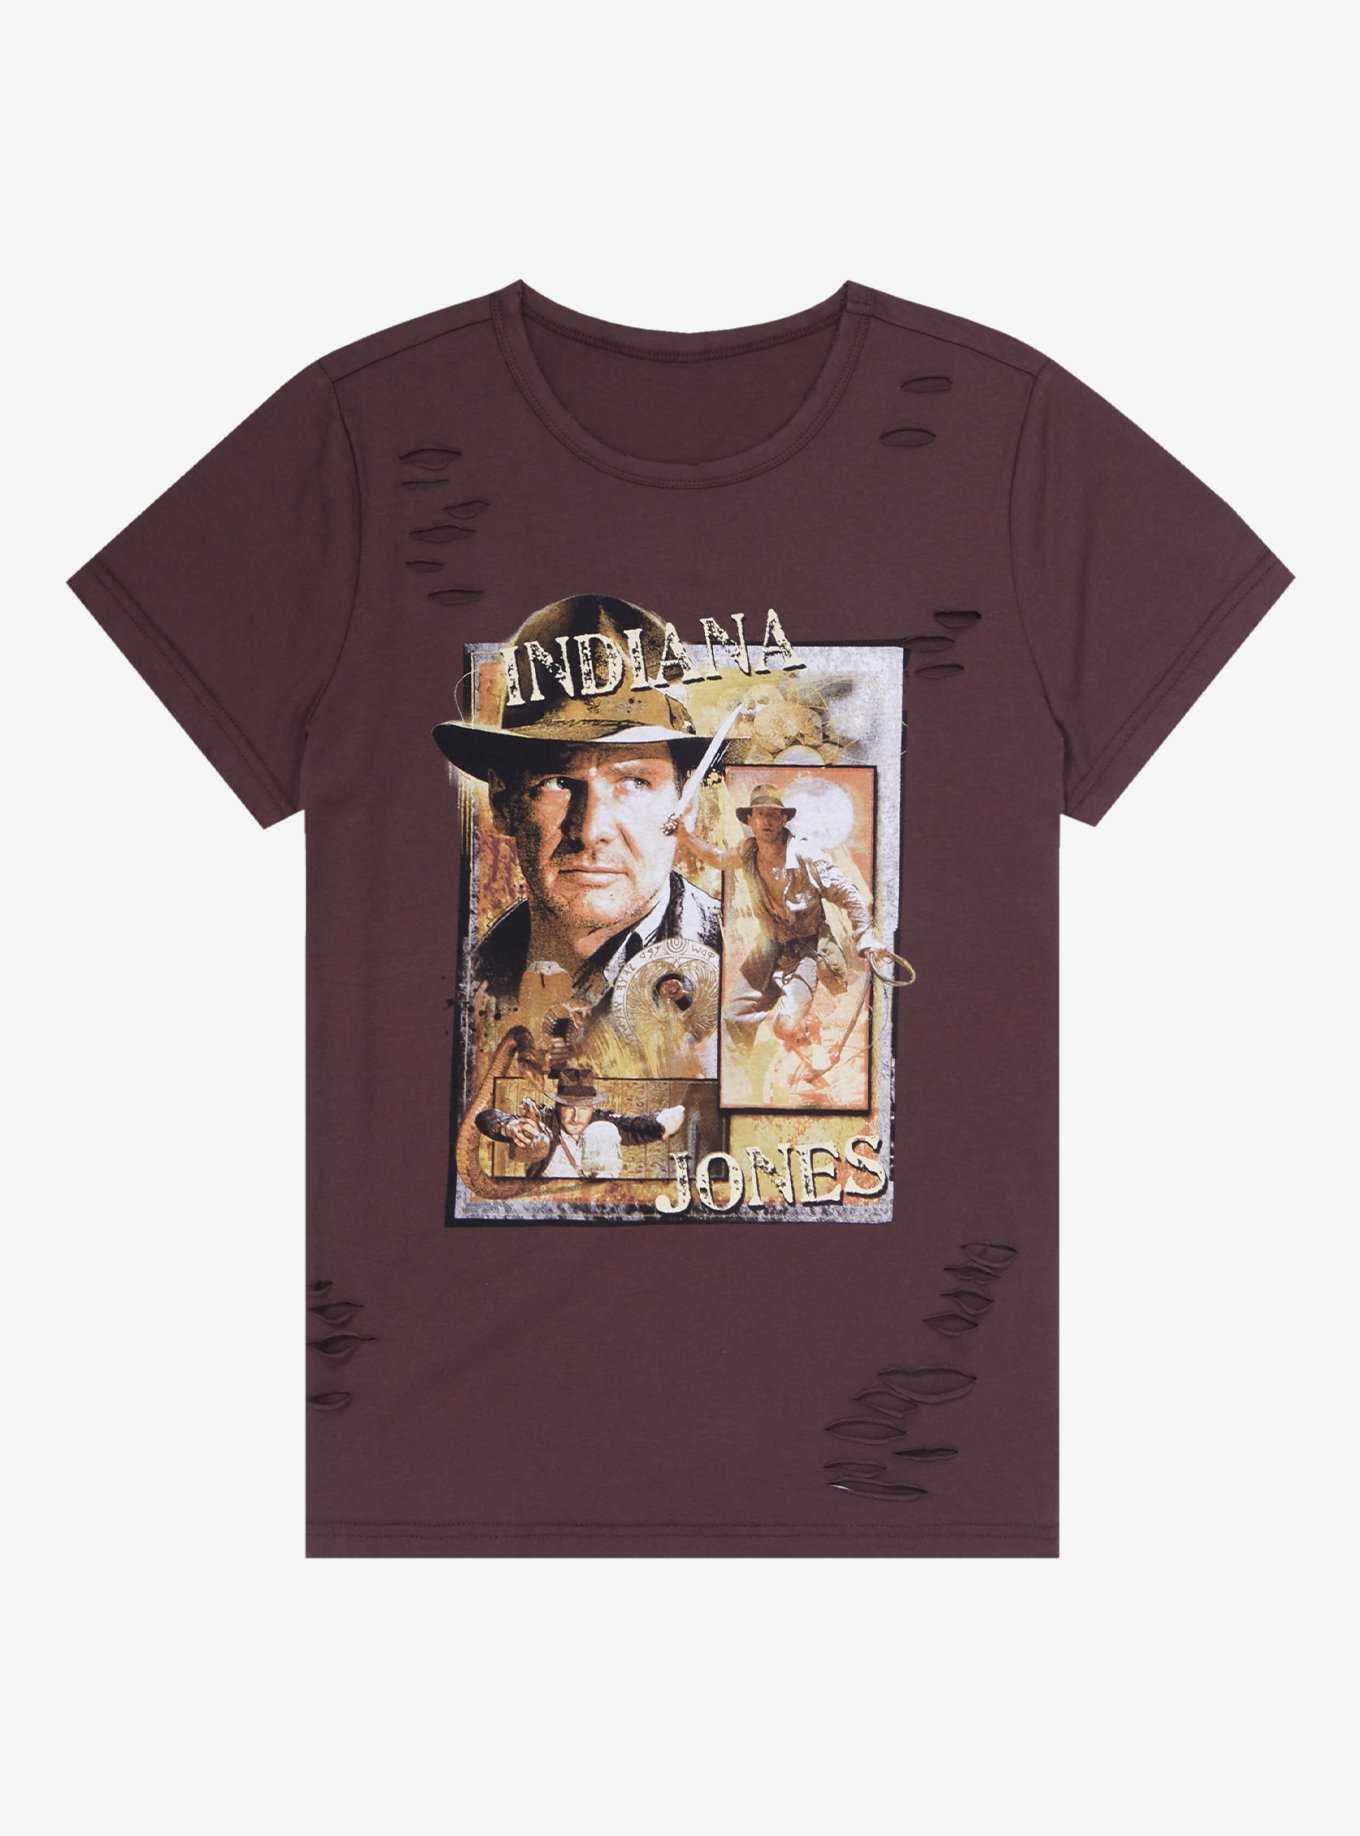 Indiana Jones Portrait Distressed Women's Plus Size T-Shirt - BoxLunch Exclusive, , hi-res